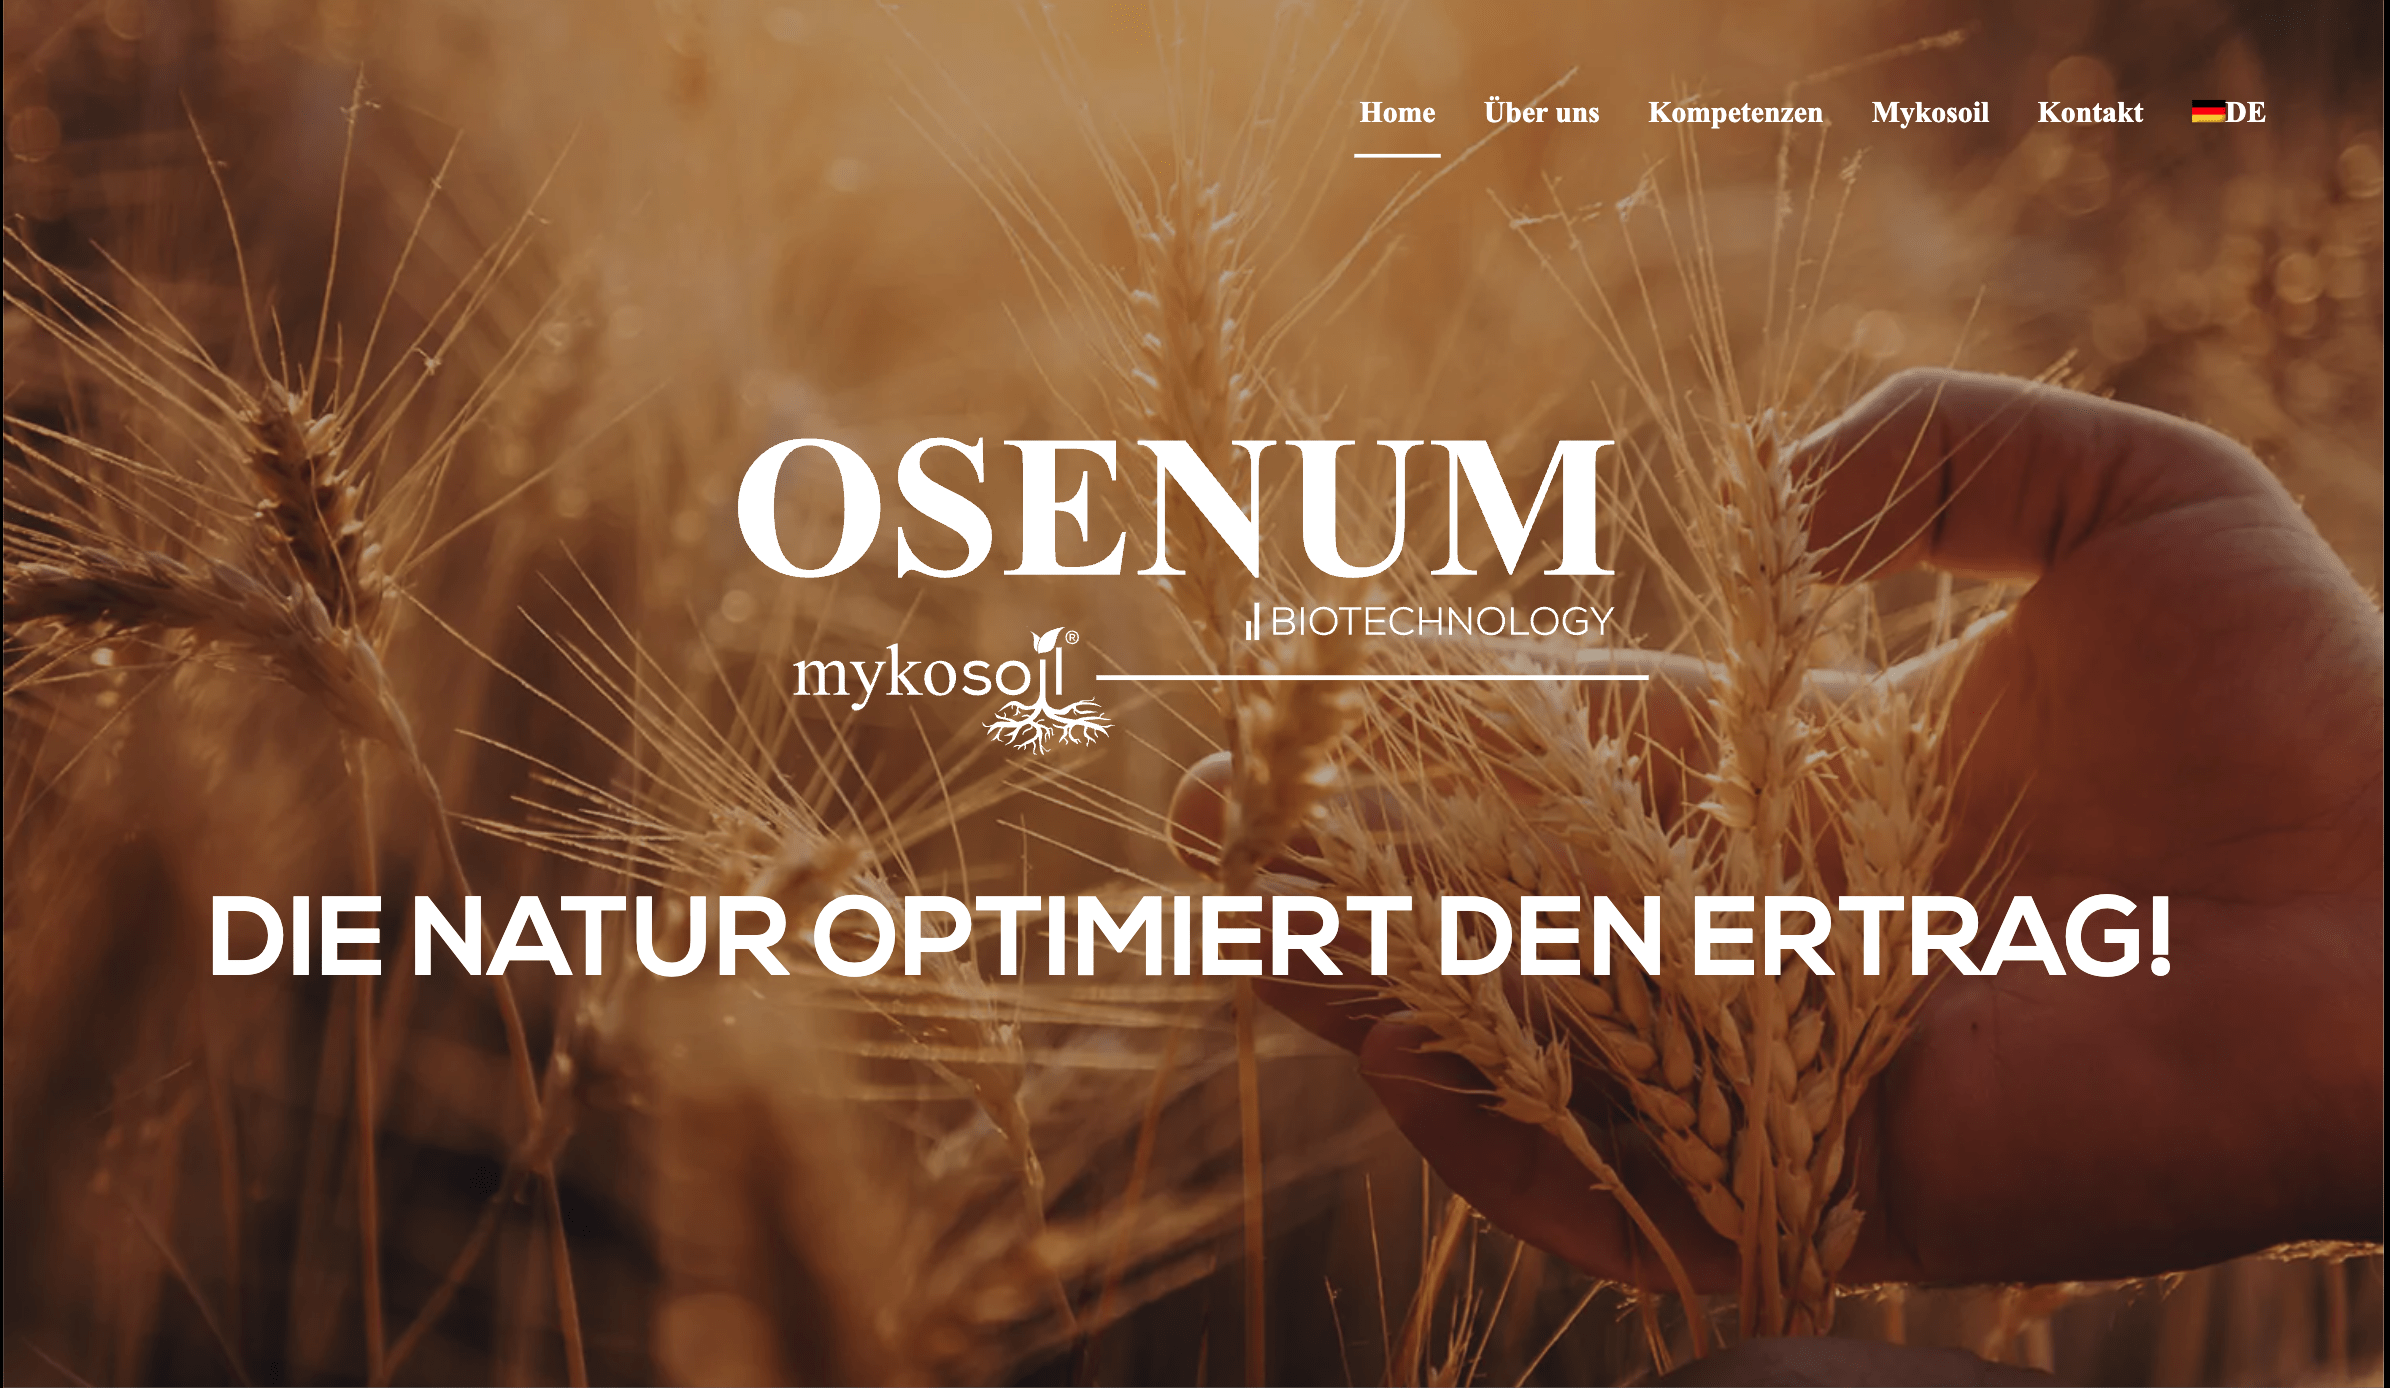 Osenum Website Plan & Los